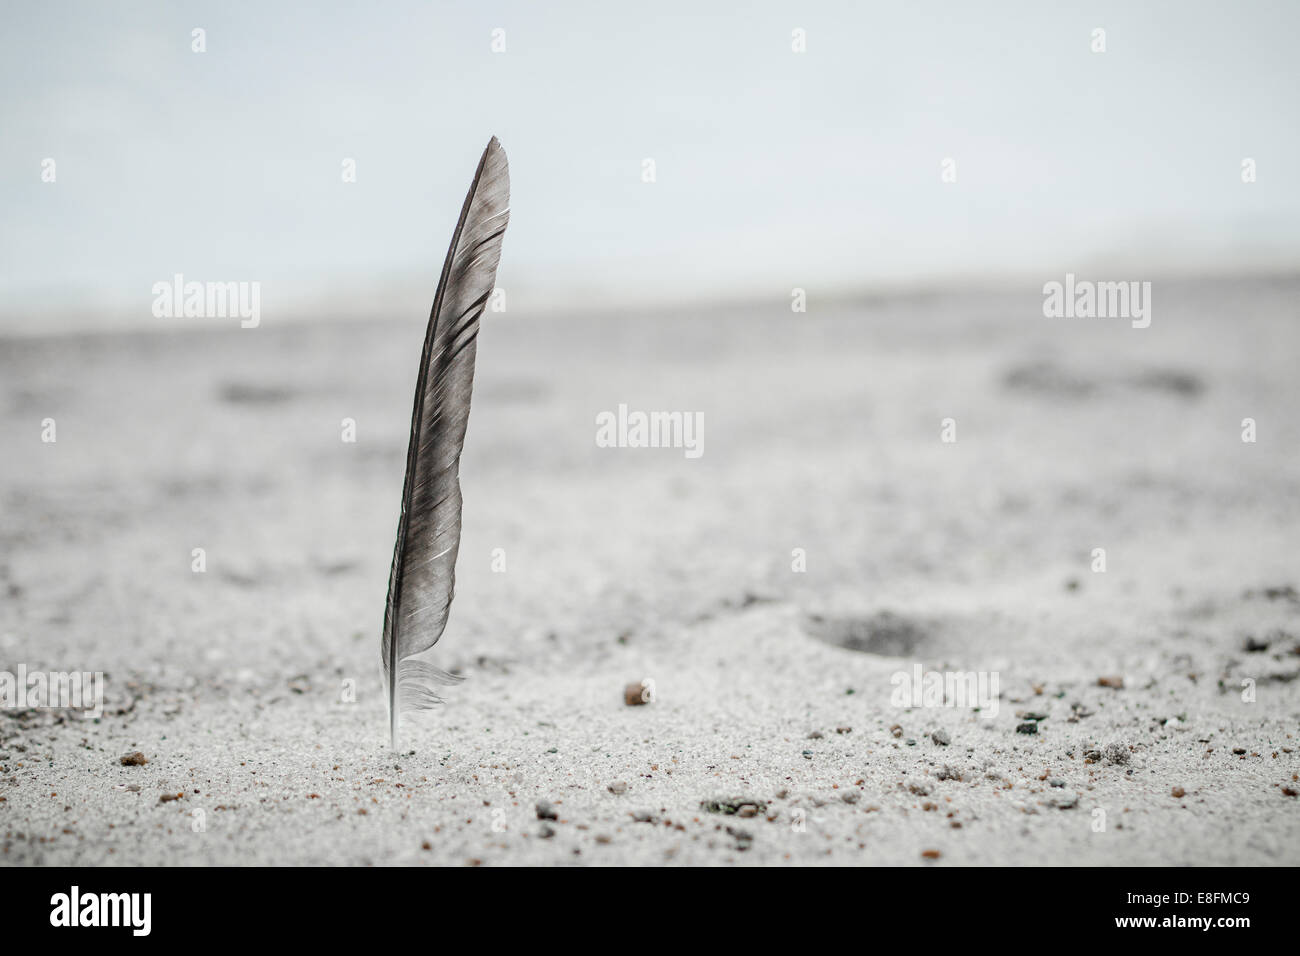 Norway, Feather found on beach Stock Photo